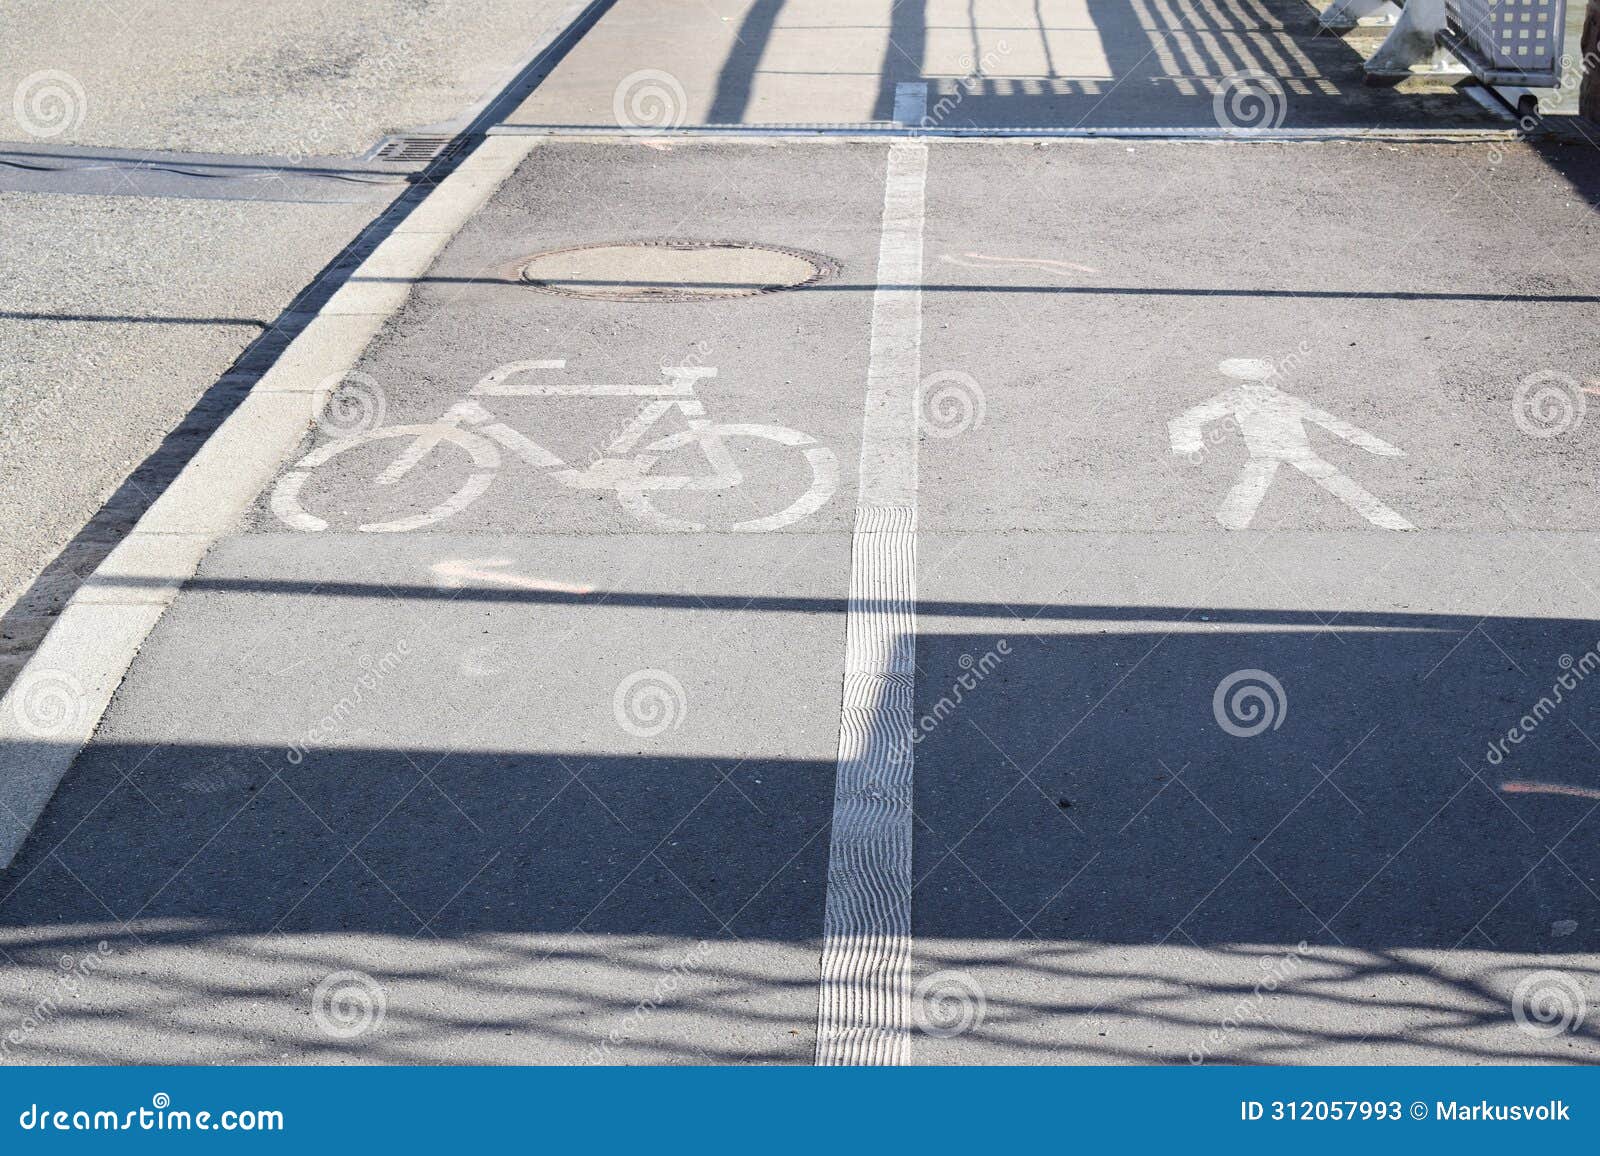 bike and pedestrian lane signs